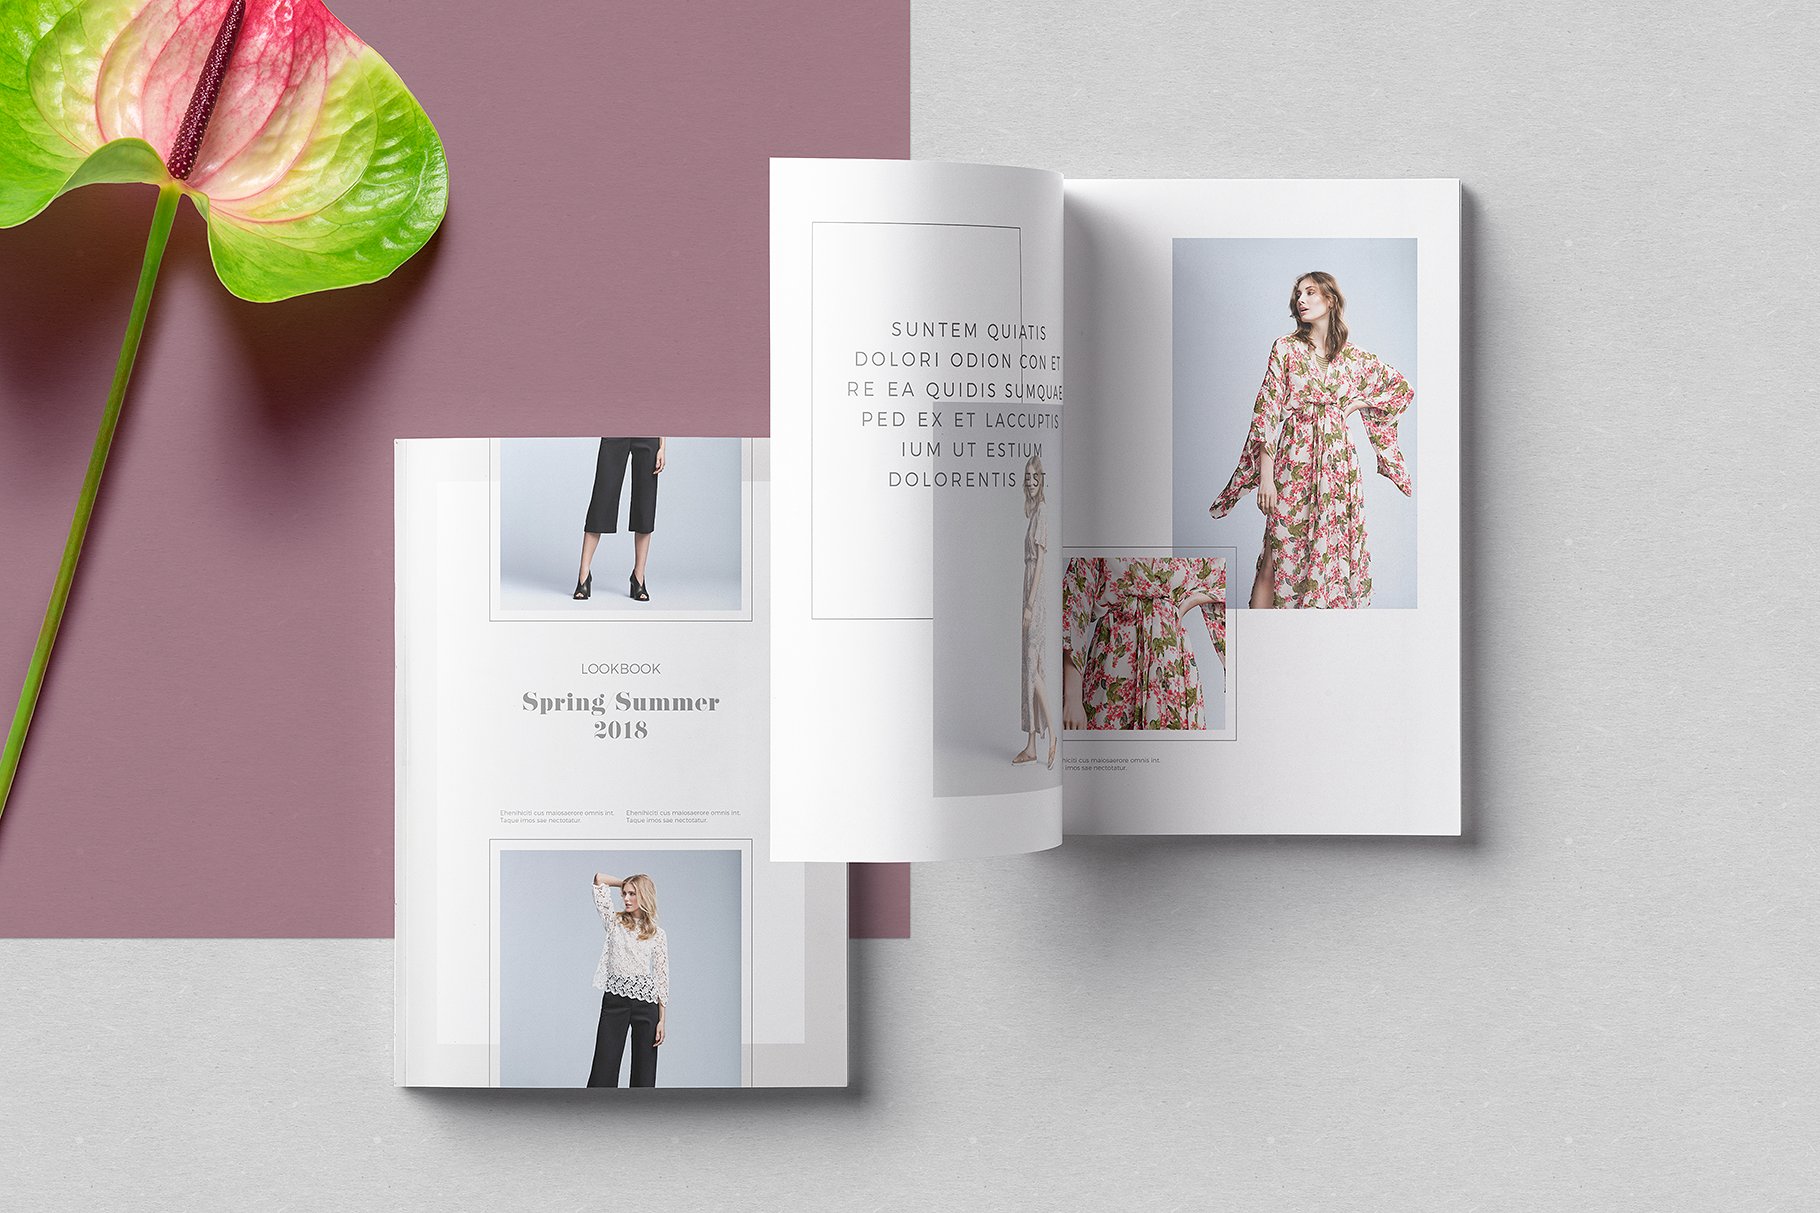 整洁优雅的现代风格女性服装画册模板 Neat And Elegant Modern Style Women’s Clothing Album Template插图